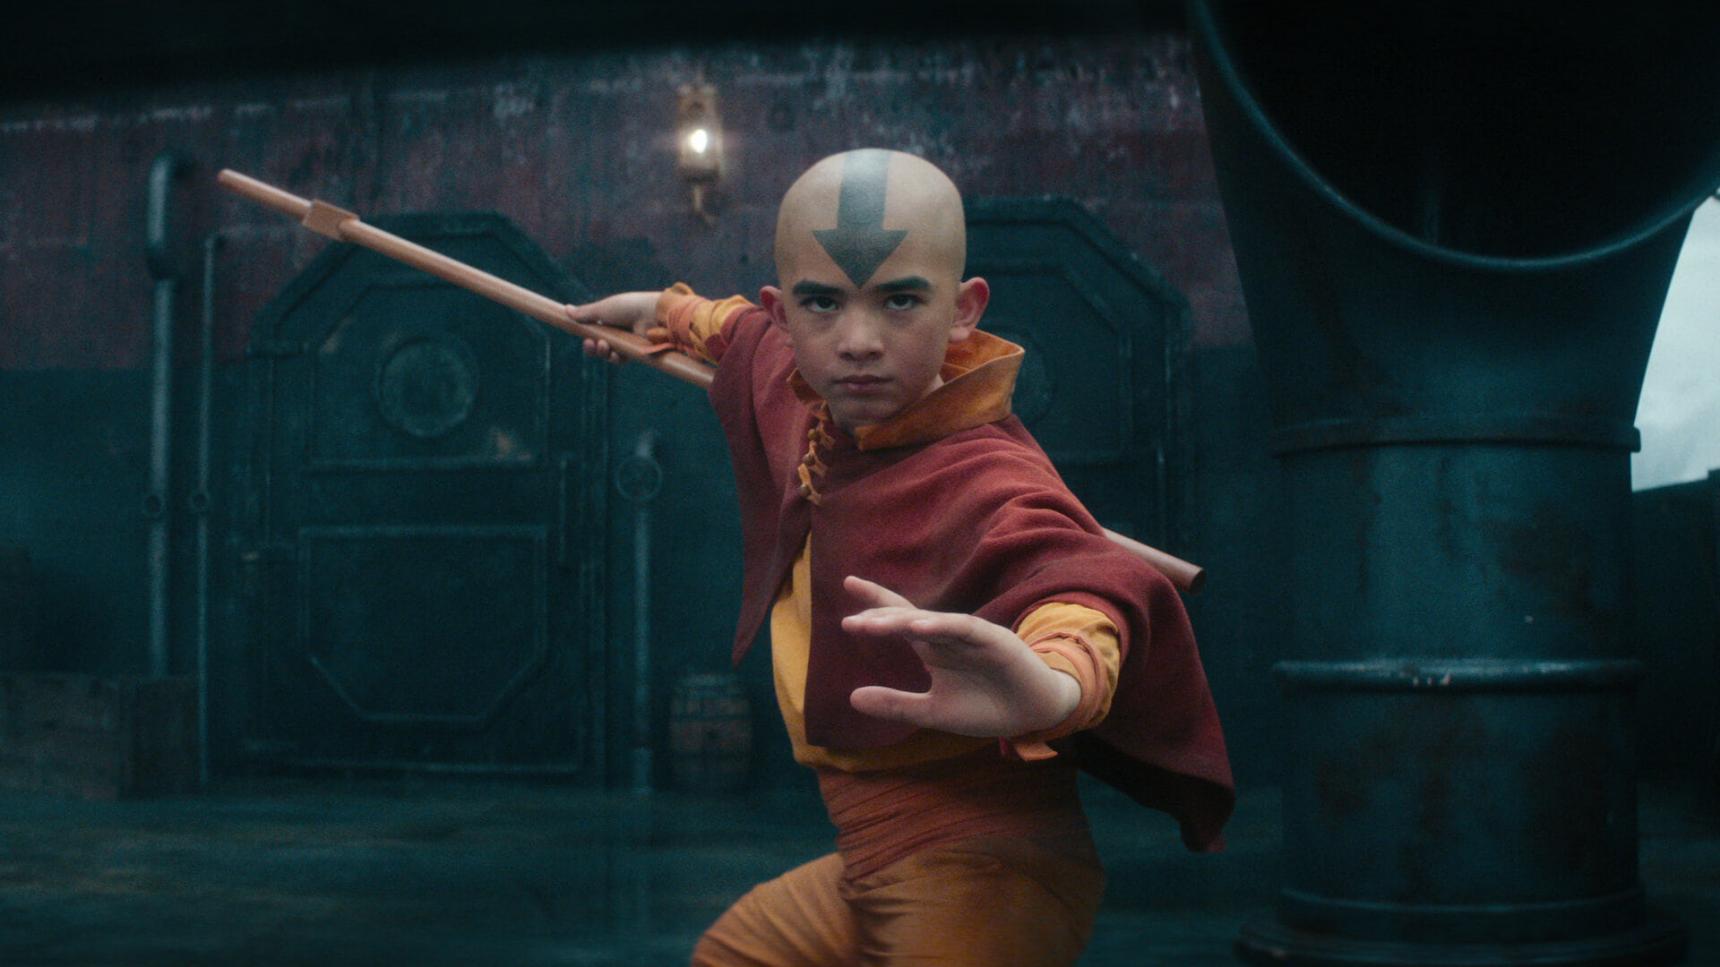 Poster del episodio 8 de Avatar: La leyenda de Aang online